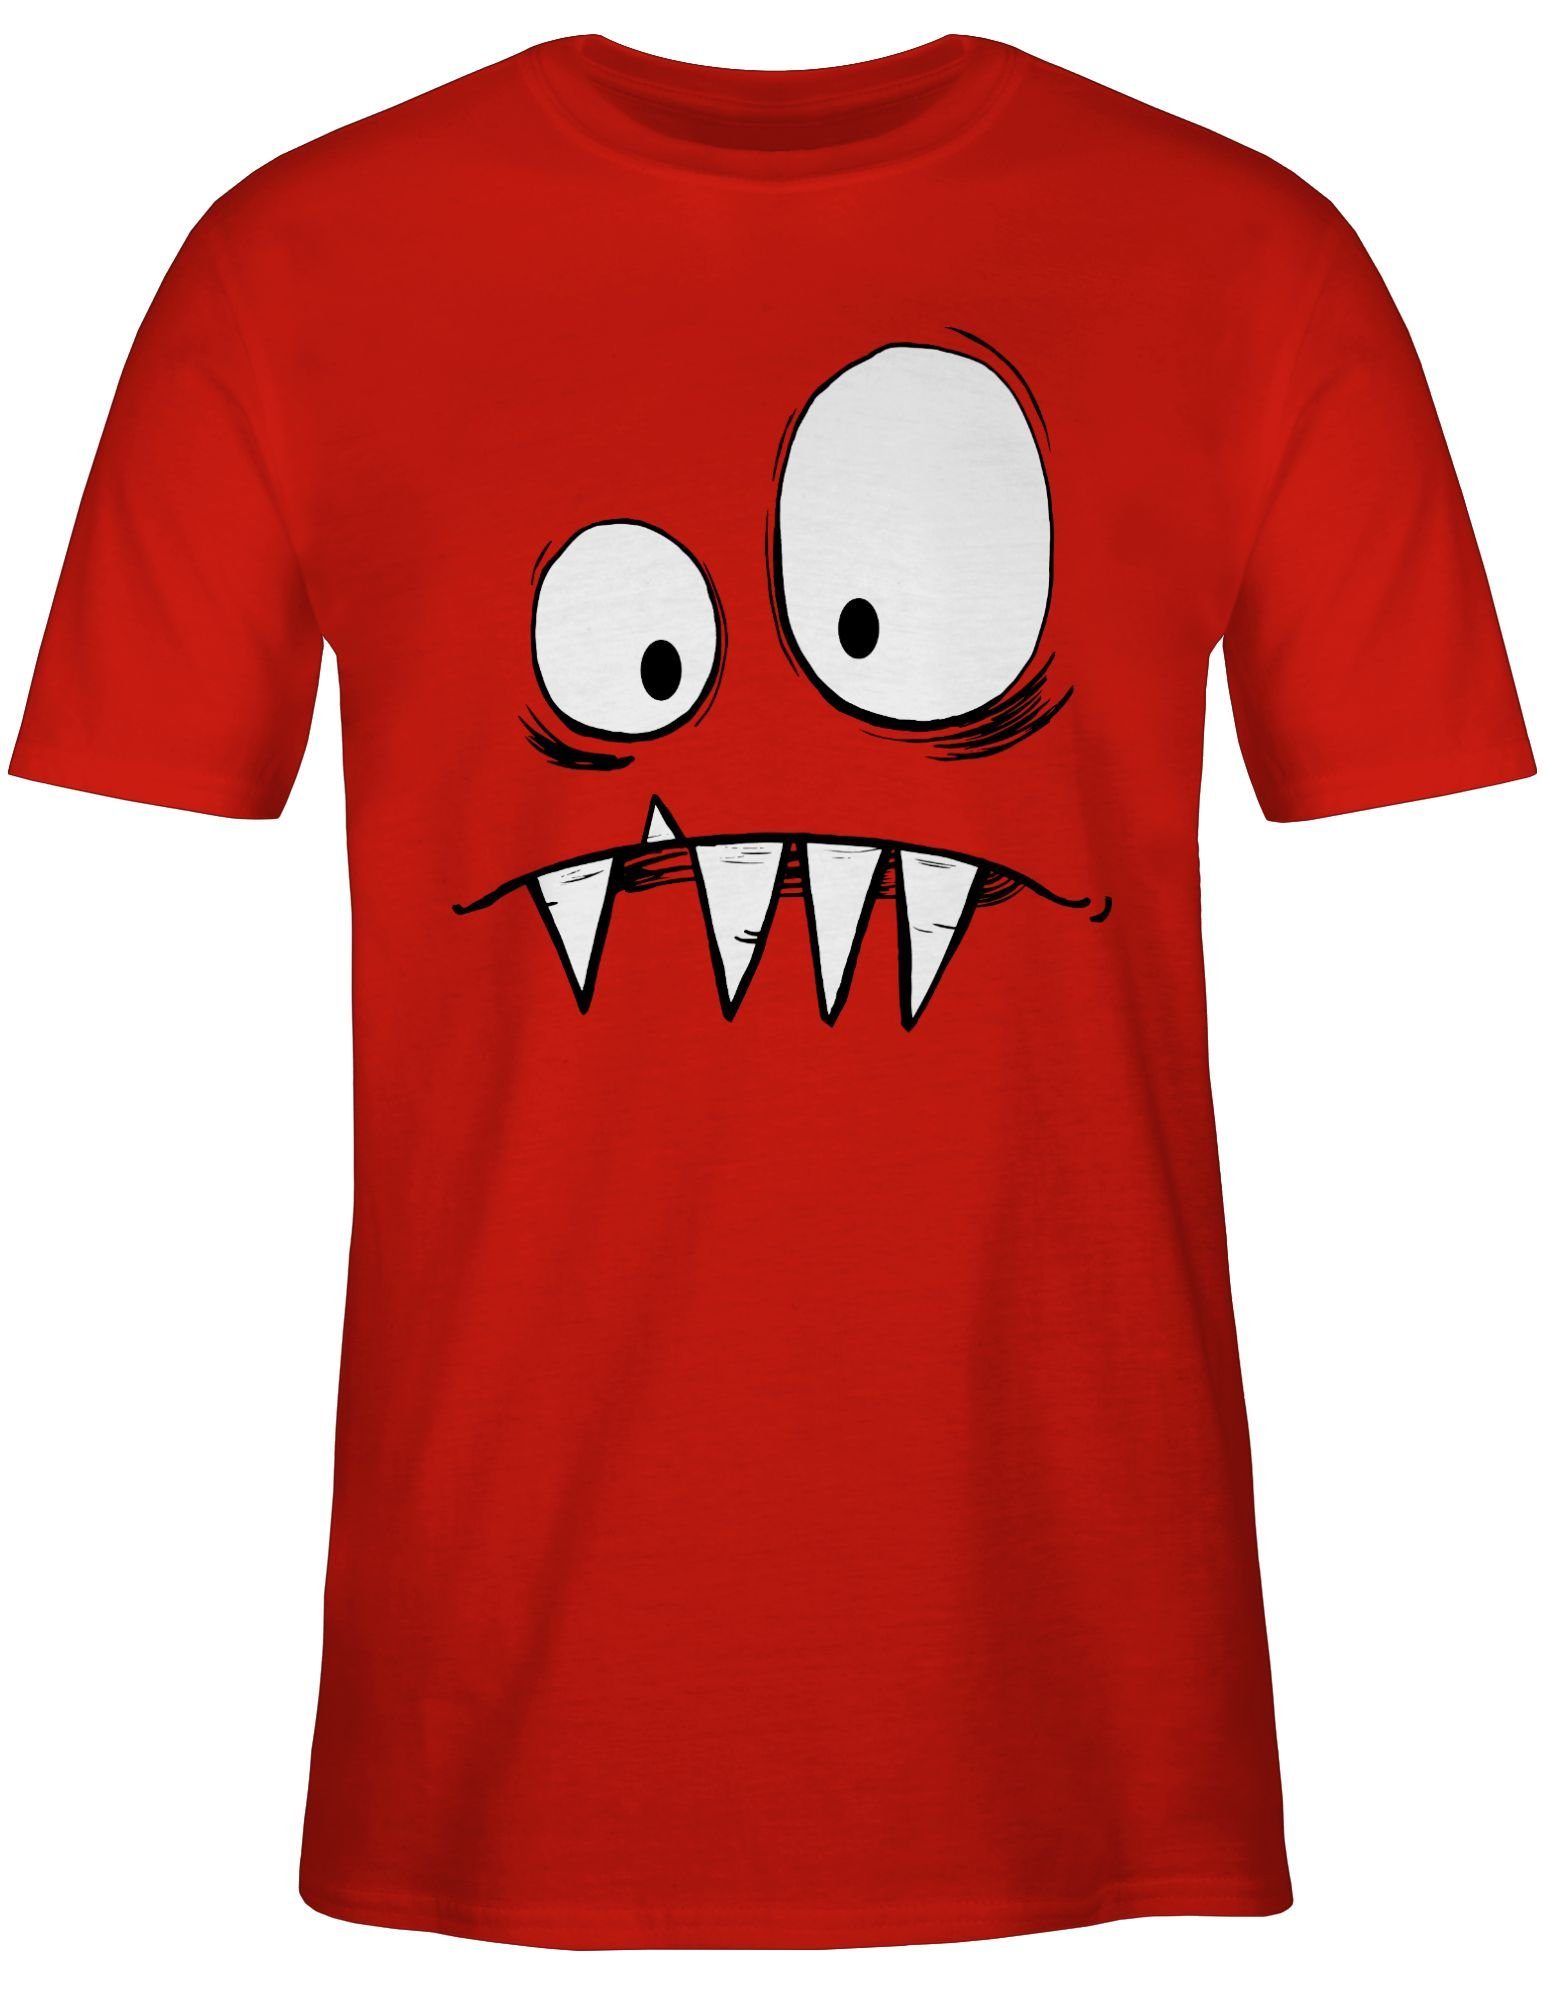 03 & Fasching Zähne gruselige T-Shirt Shirtracer Freches Augen Monster große Rot Karneval